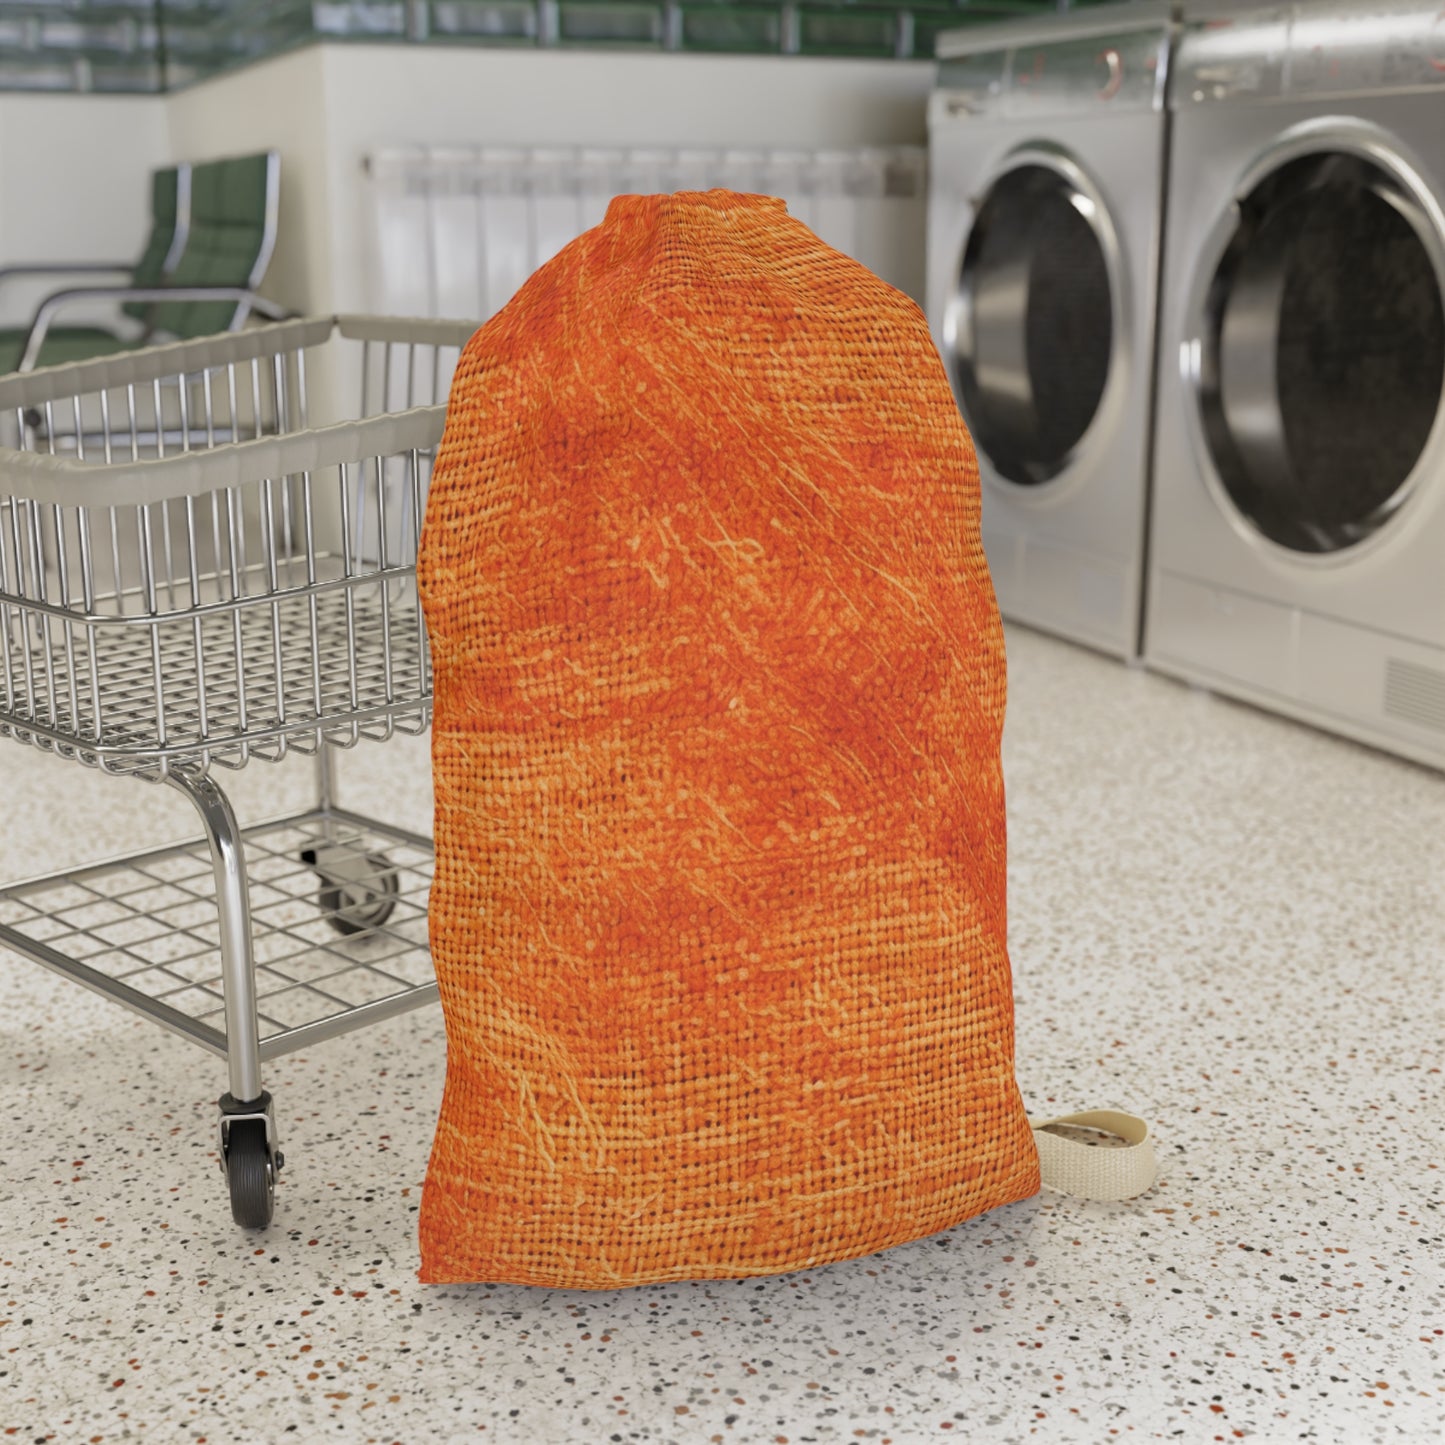 Burnt Orange/Rust: Denim-Inspired Autumn Fall Color Fabric - Laundry Bag